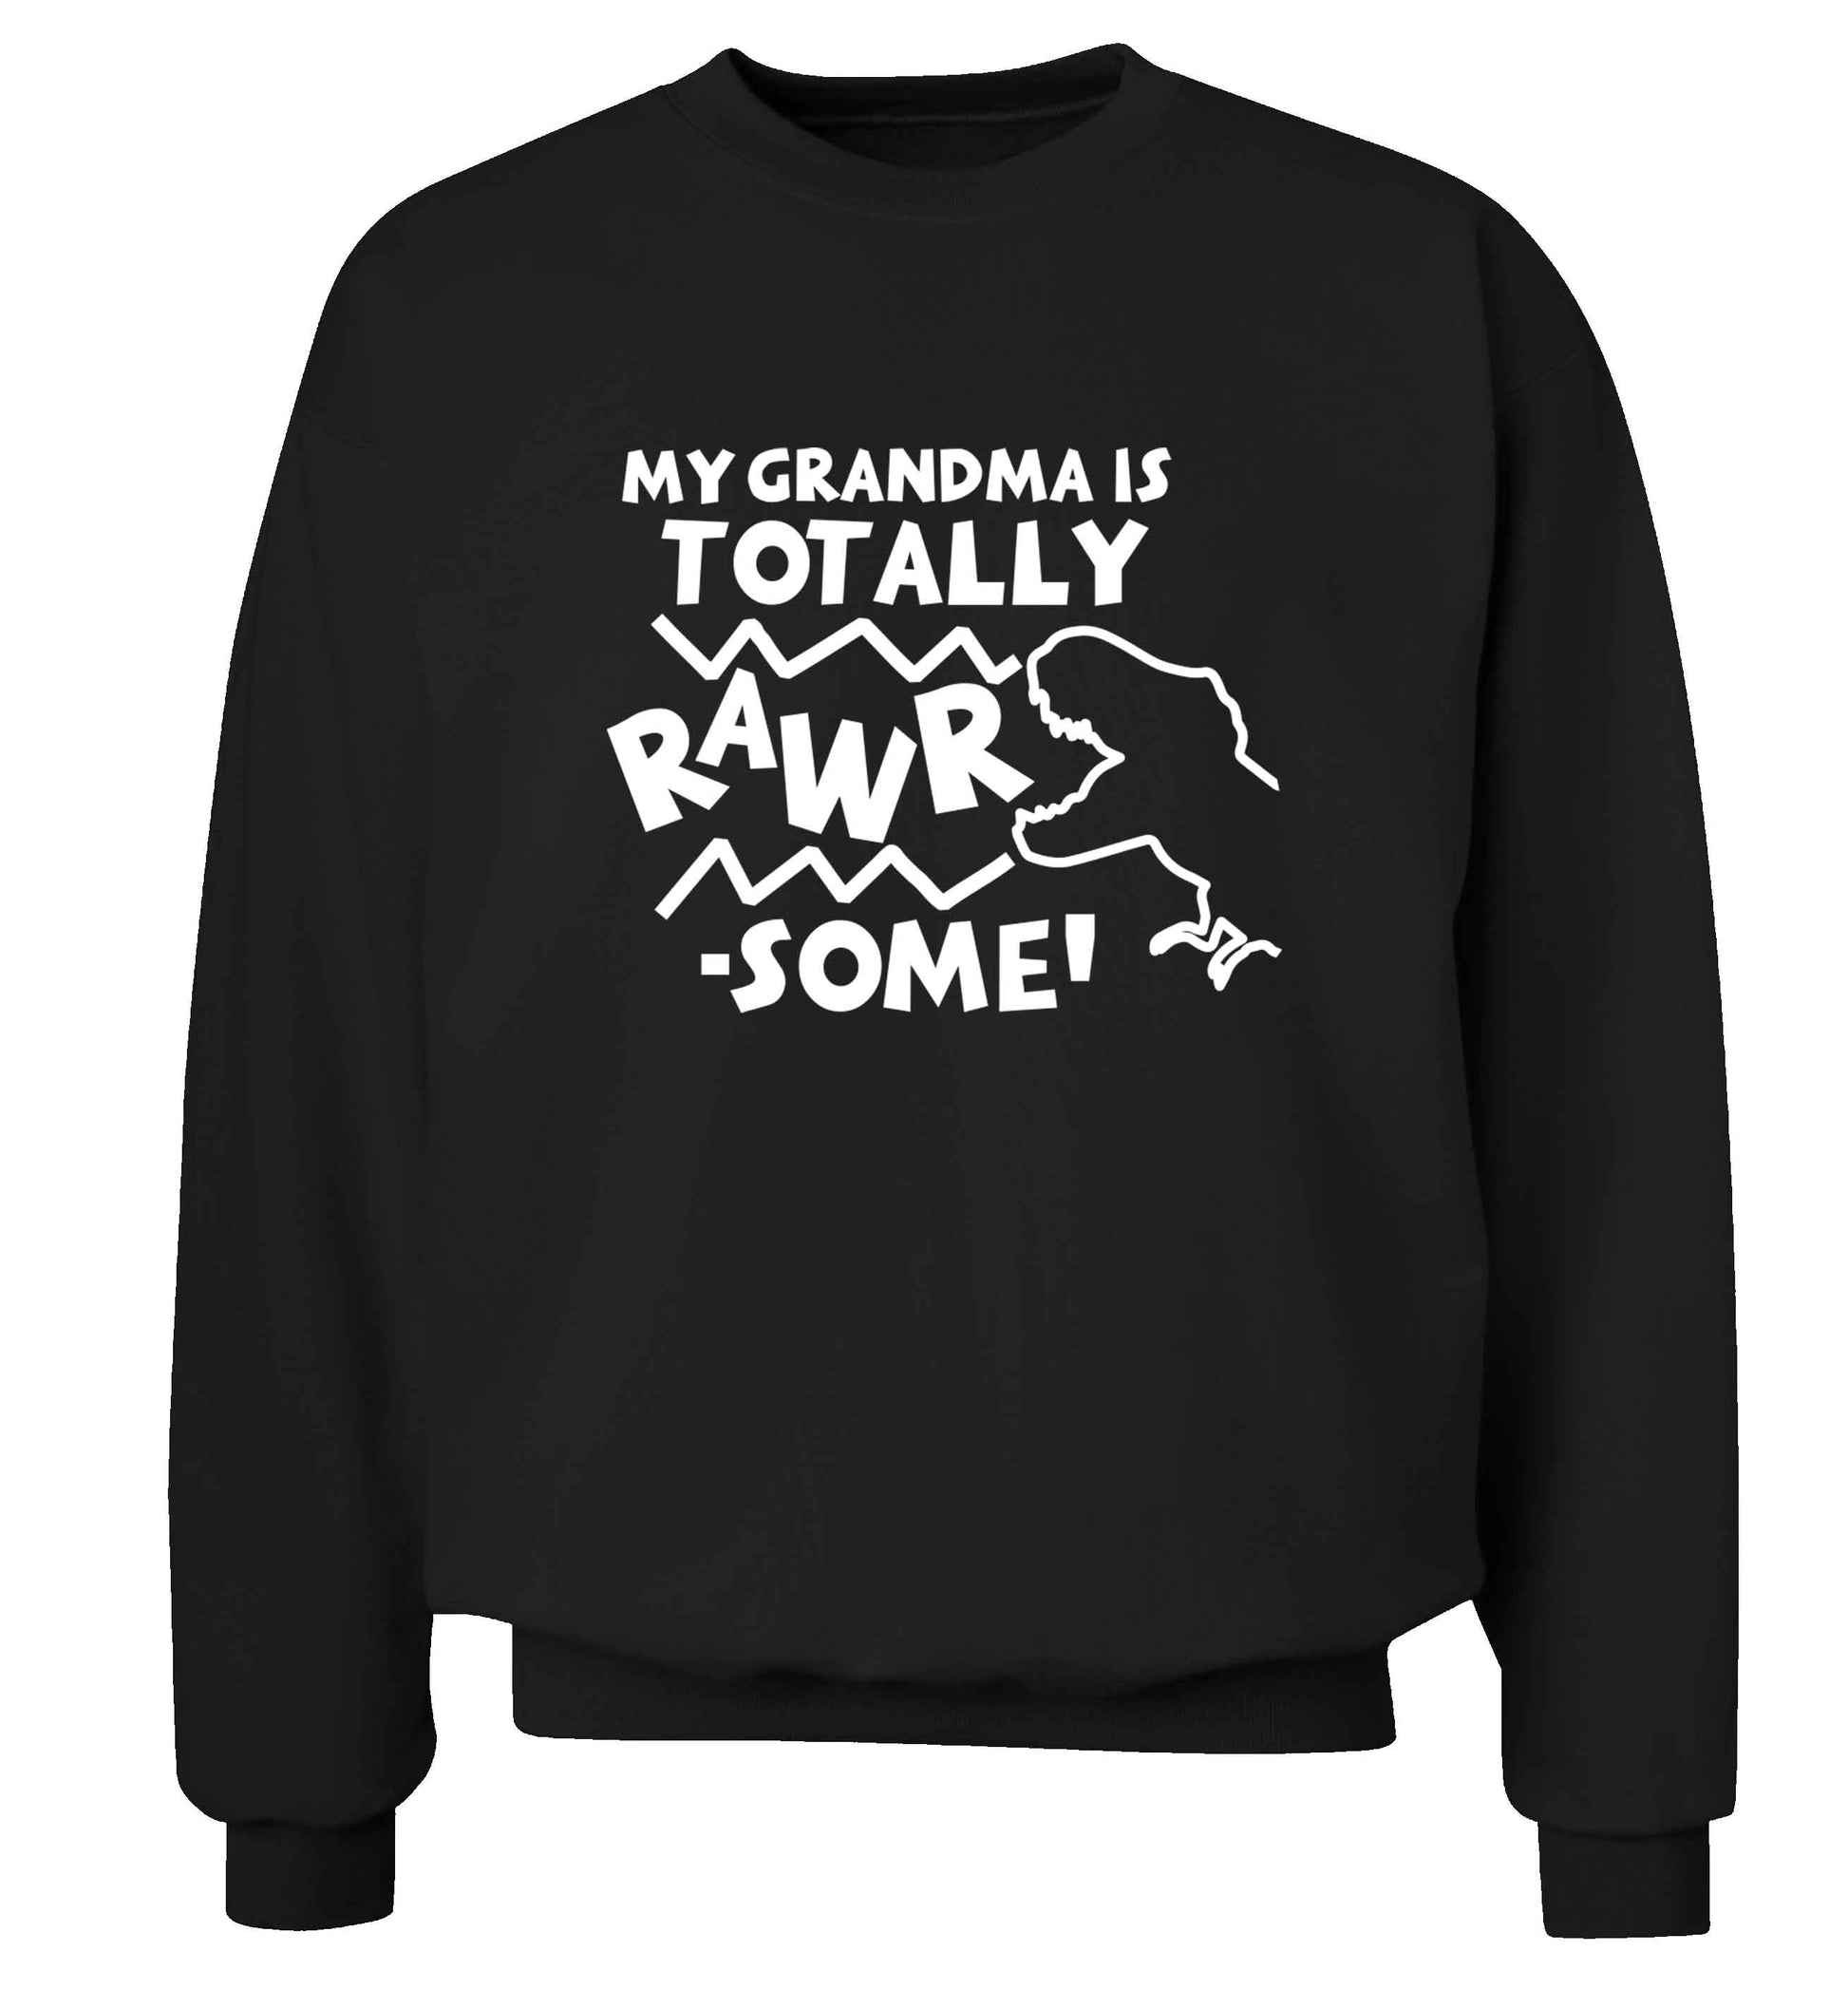 My grandma is totally rawrsome adult's unisex black sweater 2XL